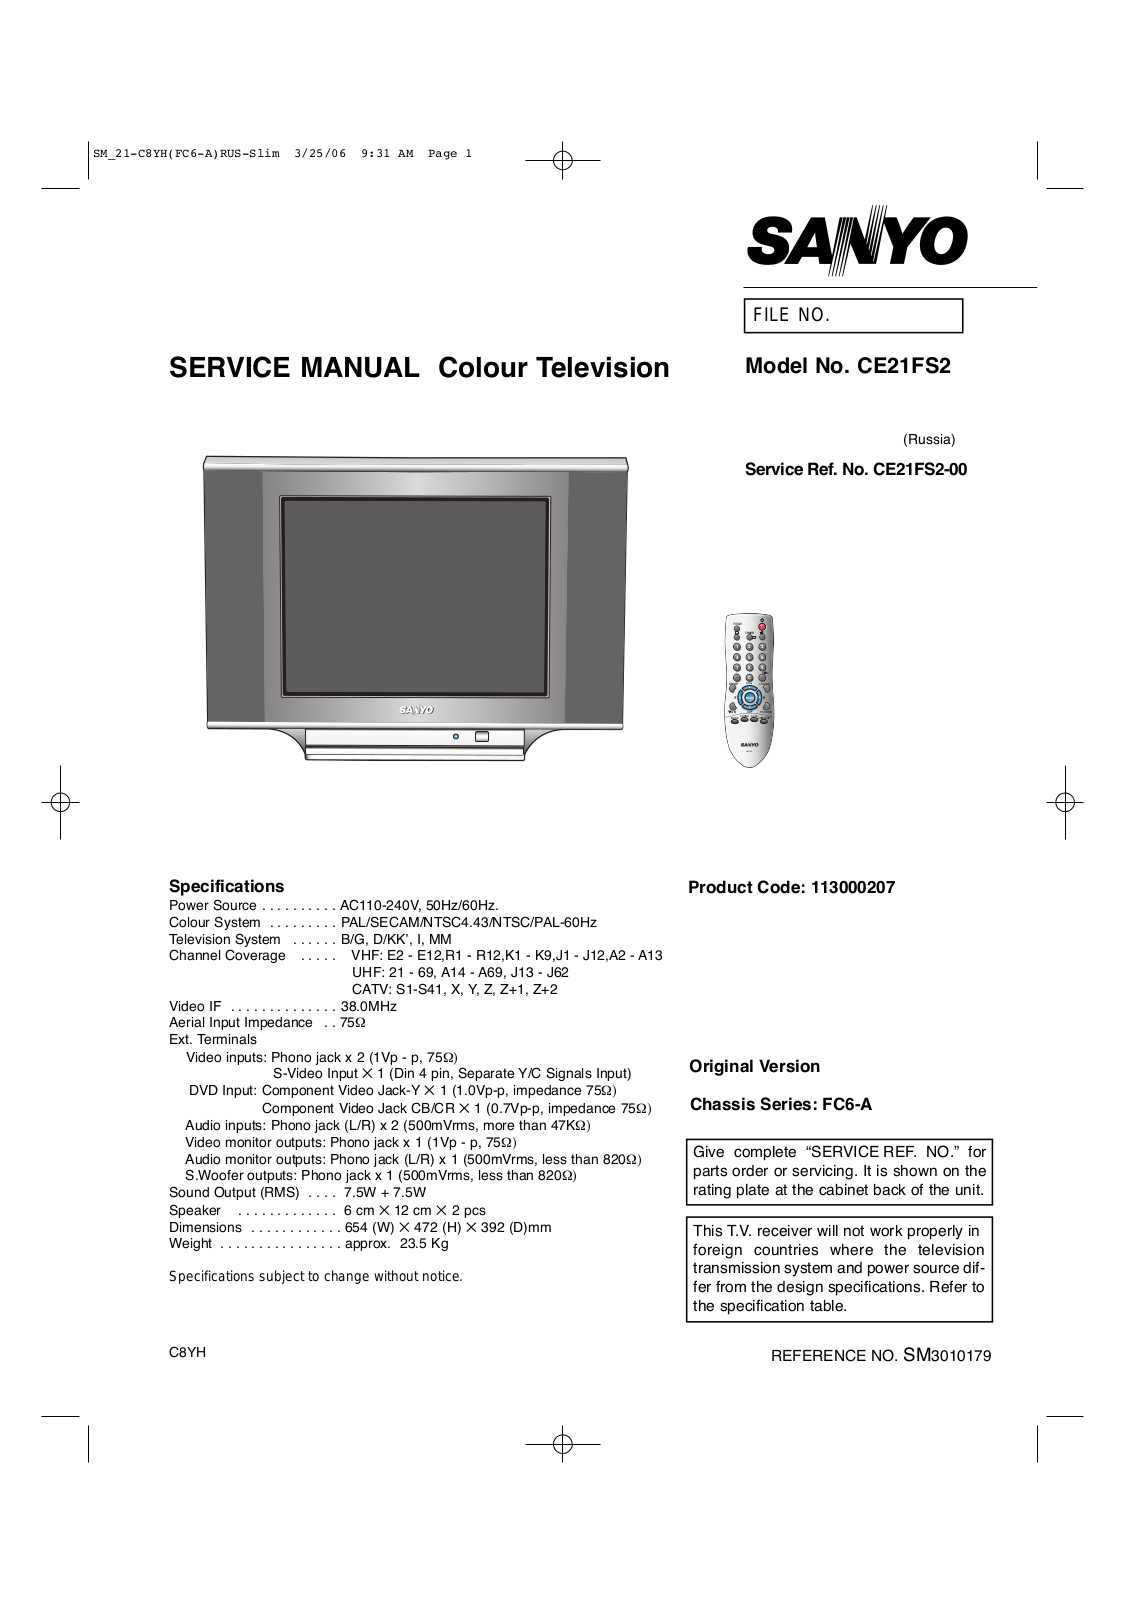 Sanyo CE21FS2 Schematic